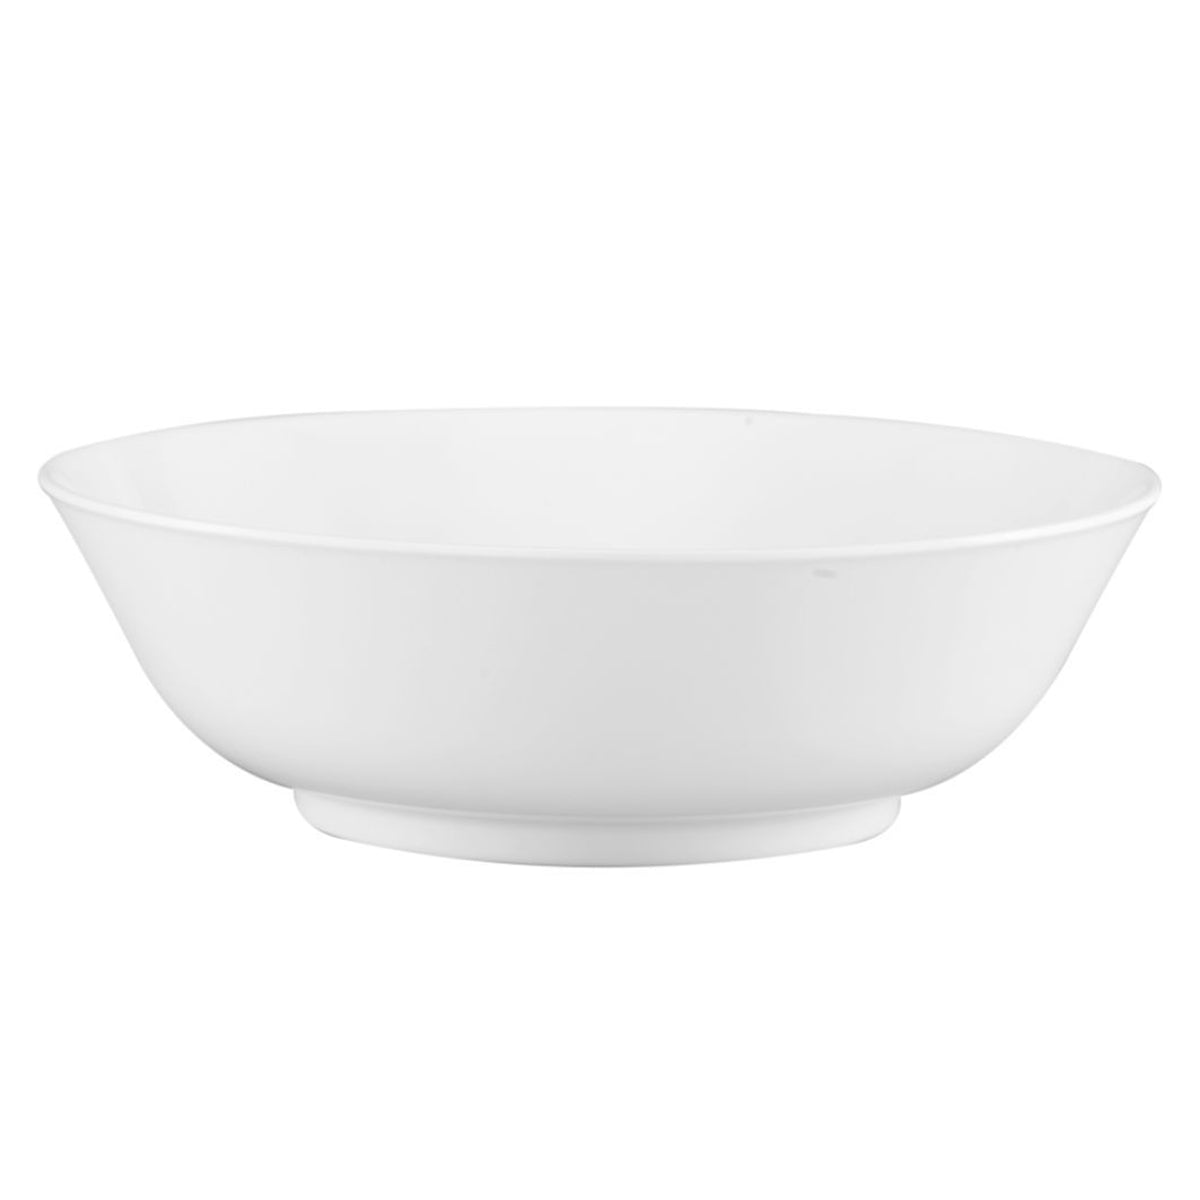 Round medium serving bowl - white